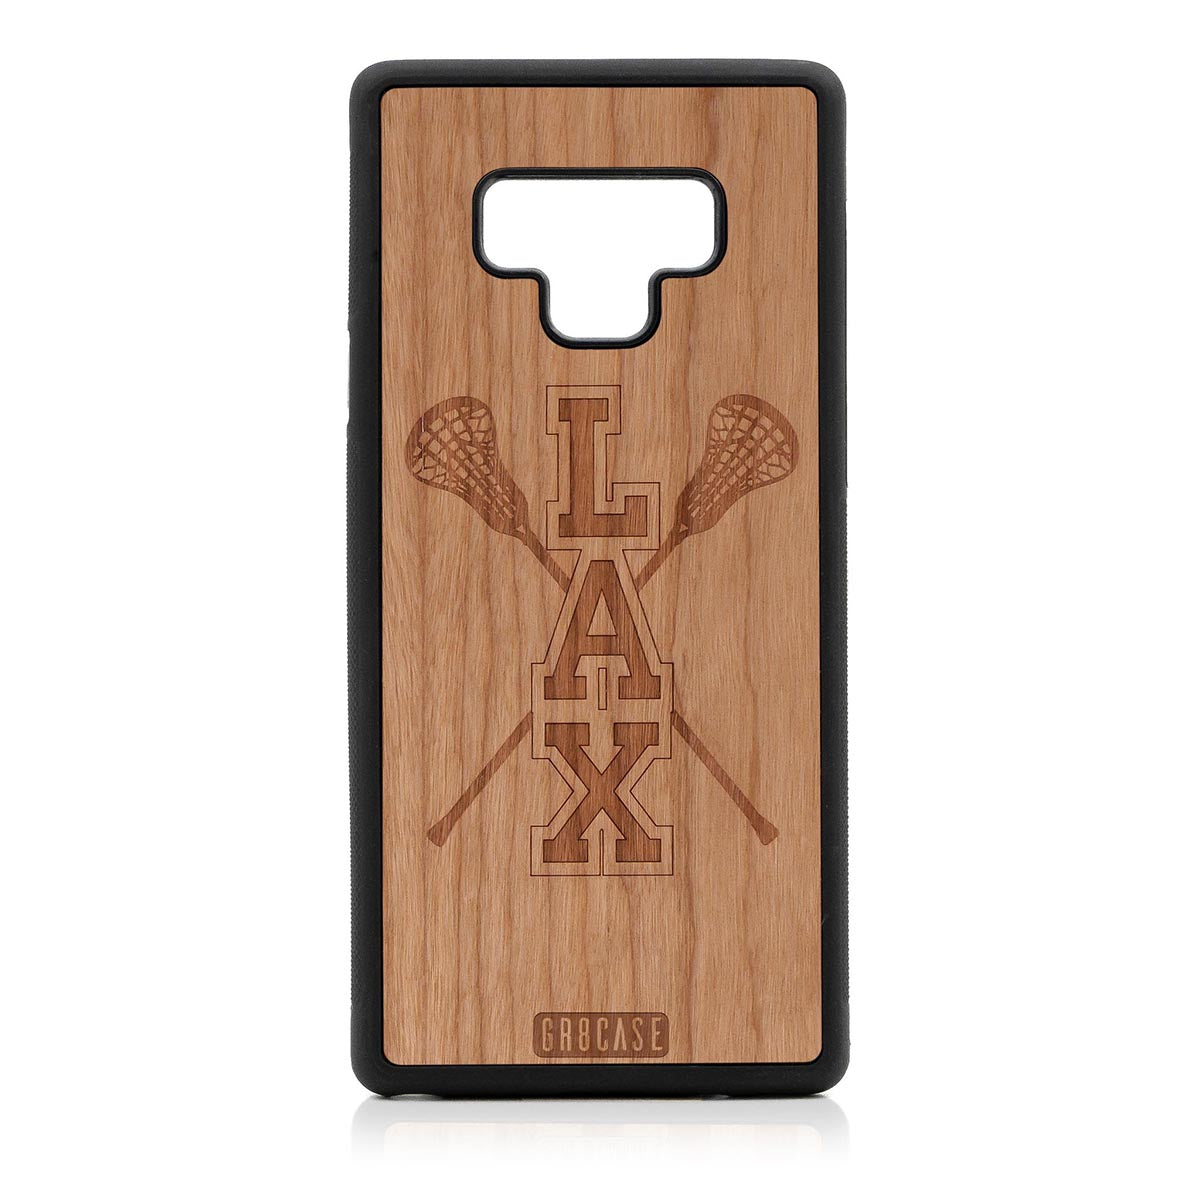 Lacrosse (LAX) Sticks Design Wood Case Samsung Galaxy Note 9 by GR8CASE